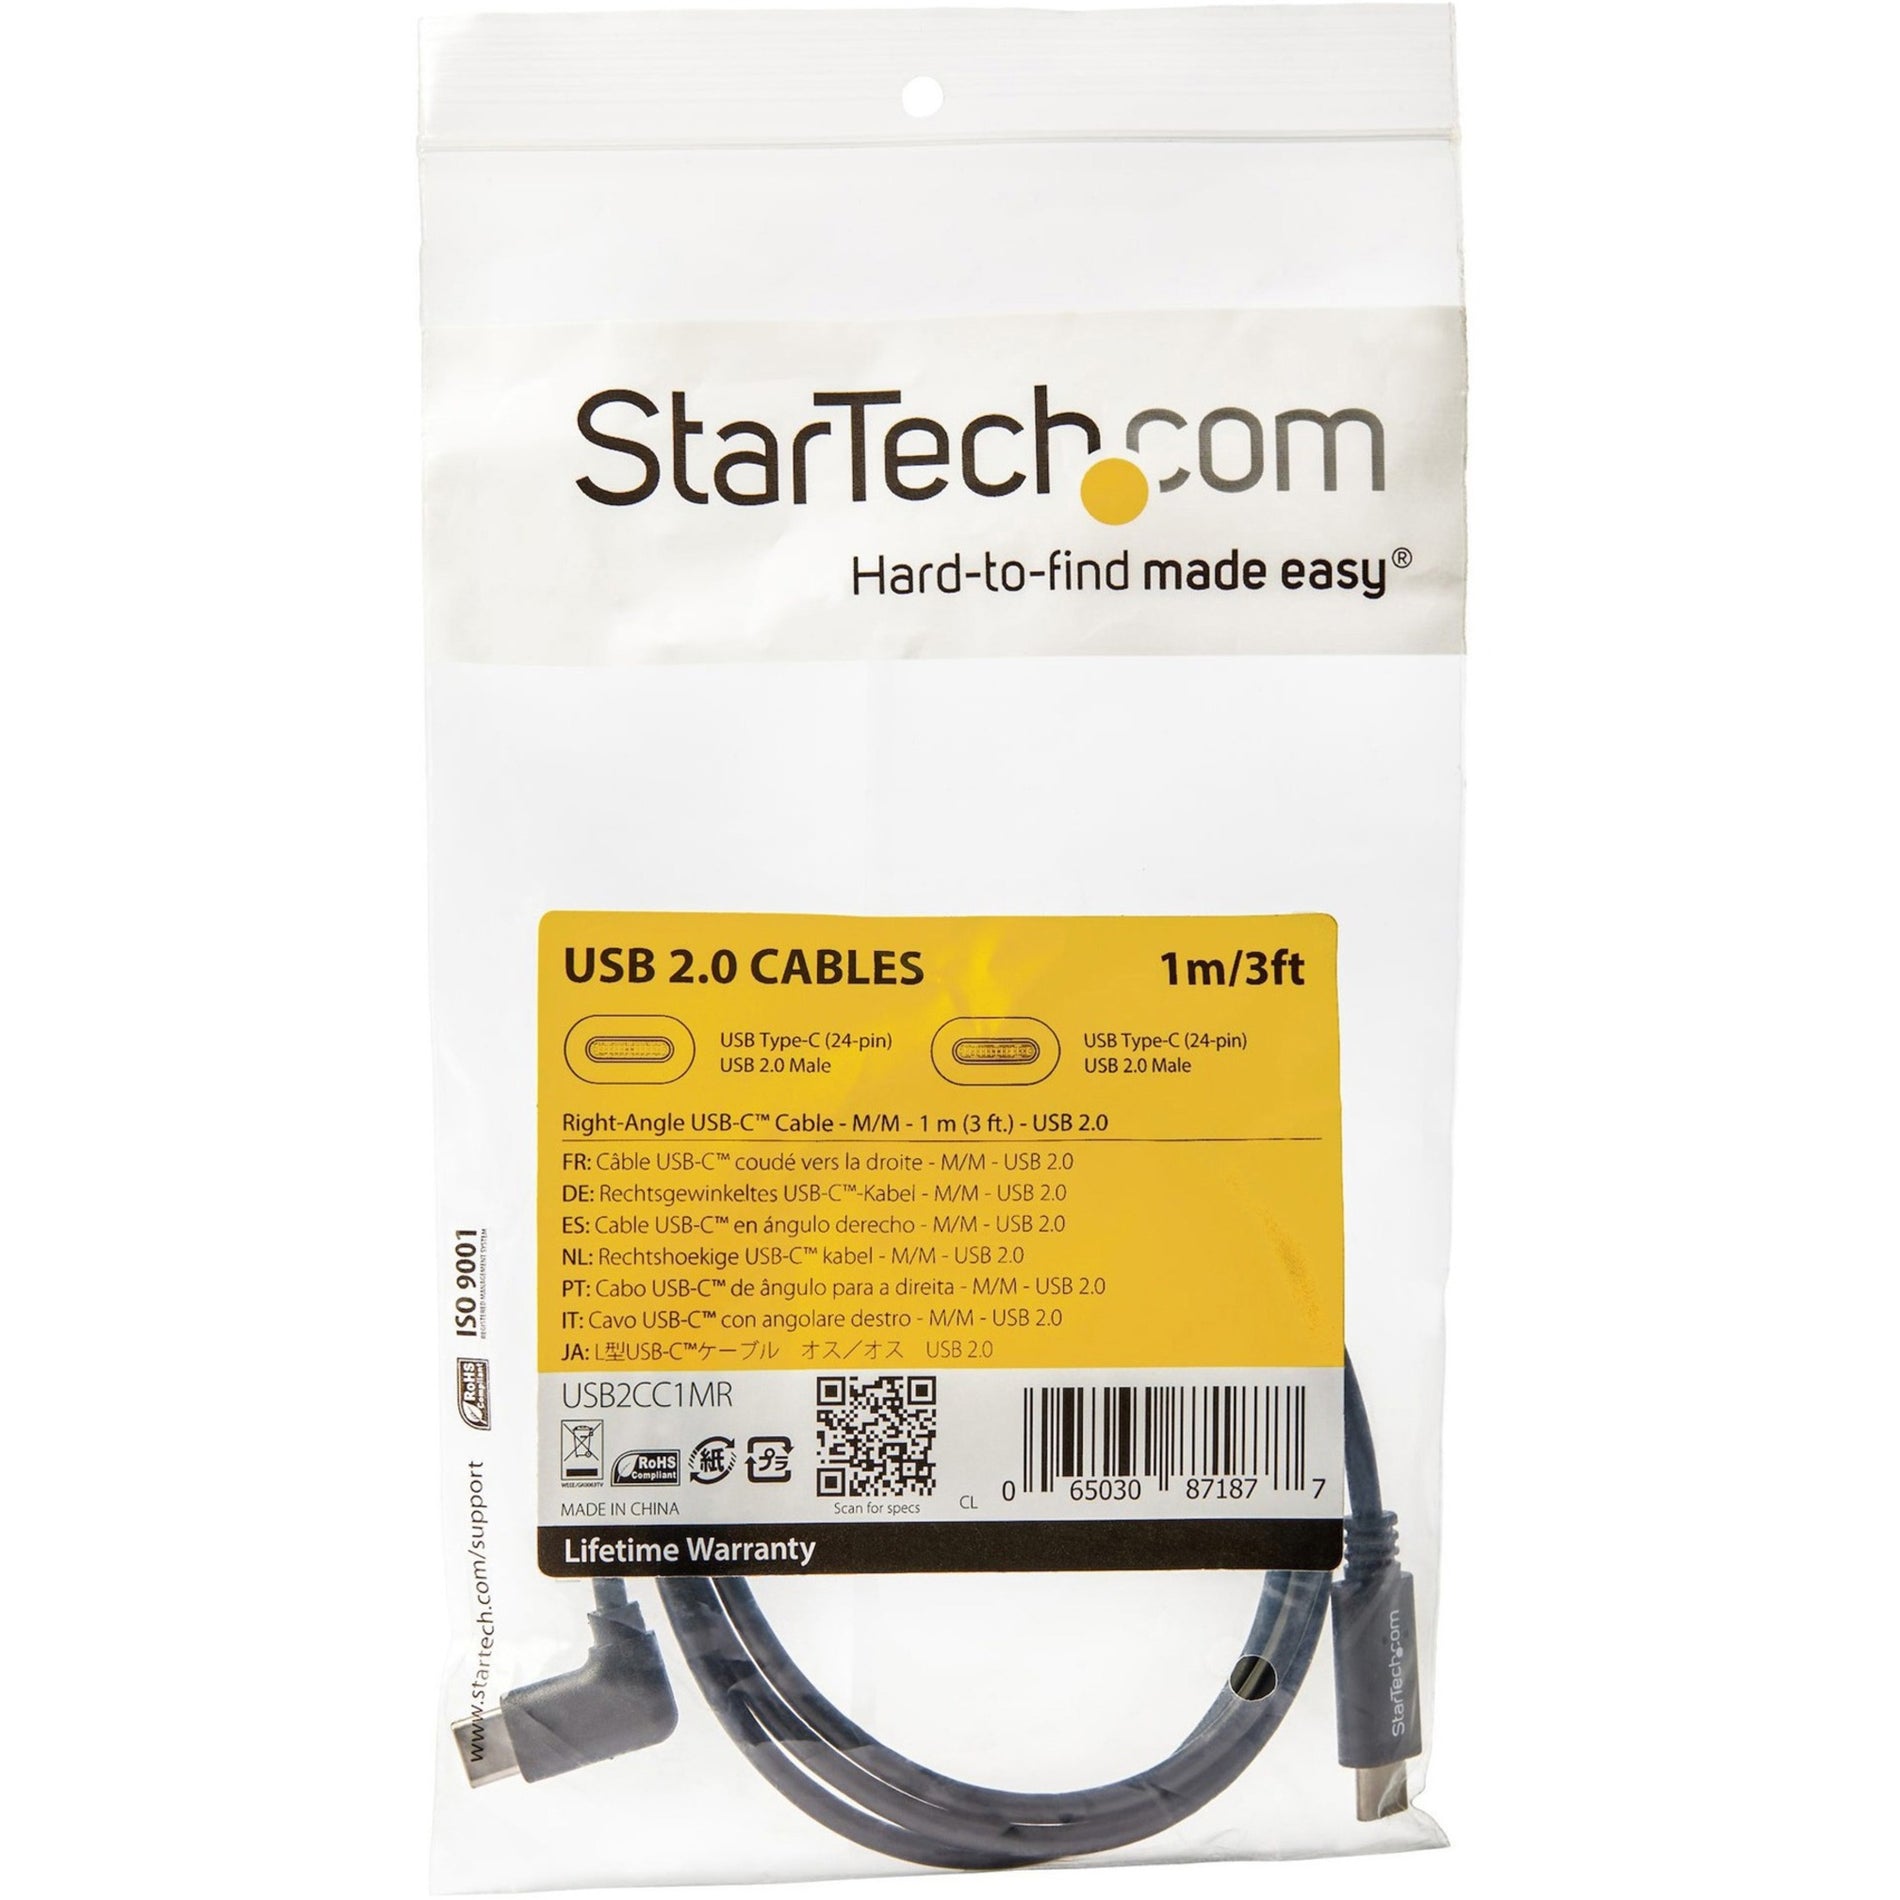 StarTech.com USB2CC1MR Right-Angle USB-C Cable - M/M - 1m (3 ft.), USB Type C Cable, 90 degree USB-C Cable, USB C to USB C Cable, USB-C Charge Cable